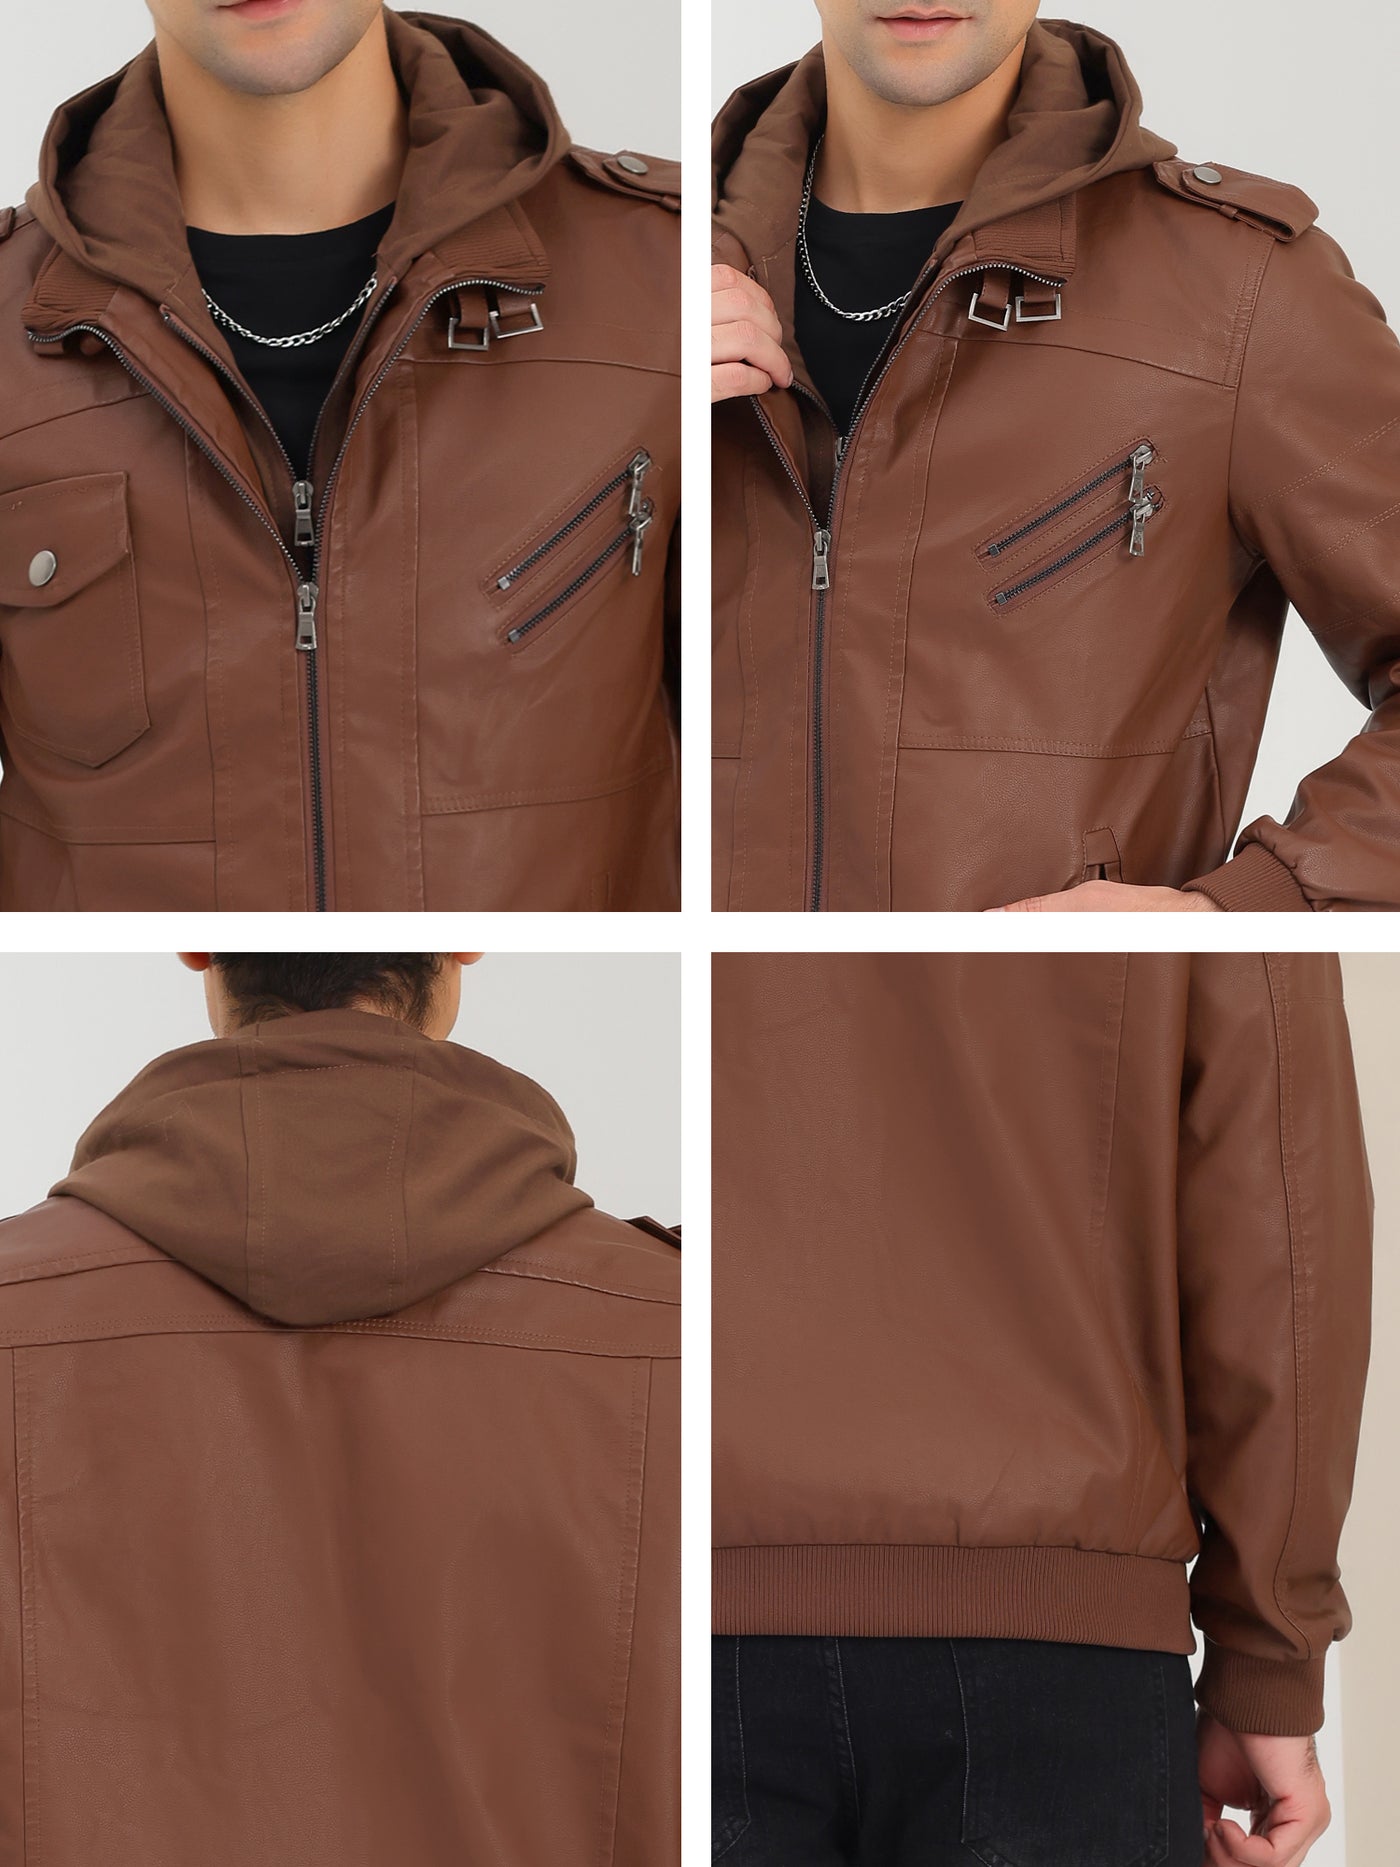 Bublédon Men's Motorcycle Hooded Jacket Full Zip Biker Faux Leather Coat with Hood